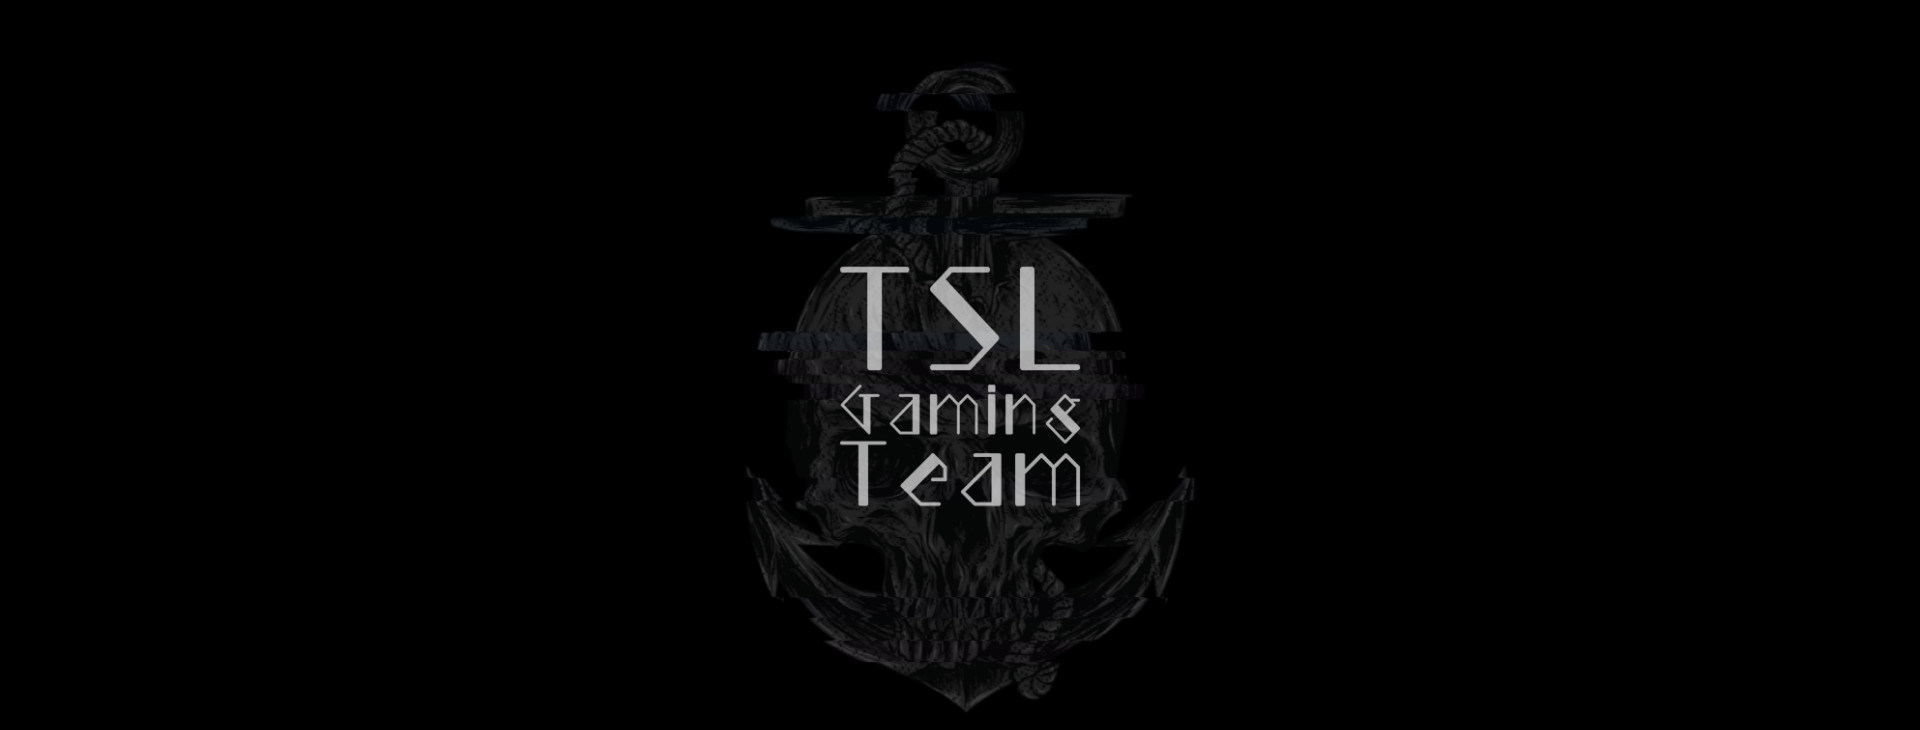 Tsl Gaming Team Discord Steam 綜合討論板哈啦板 巴哈姆特